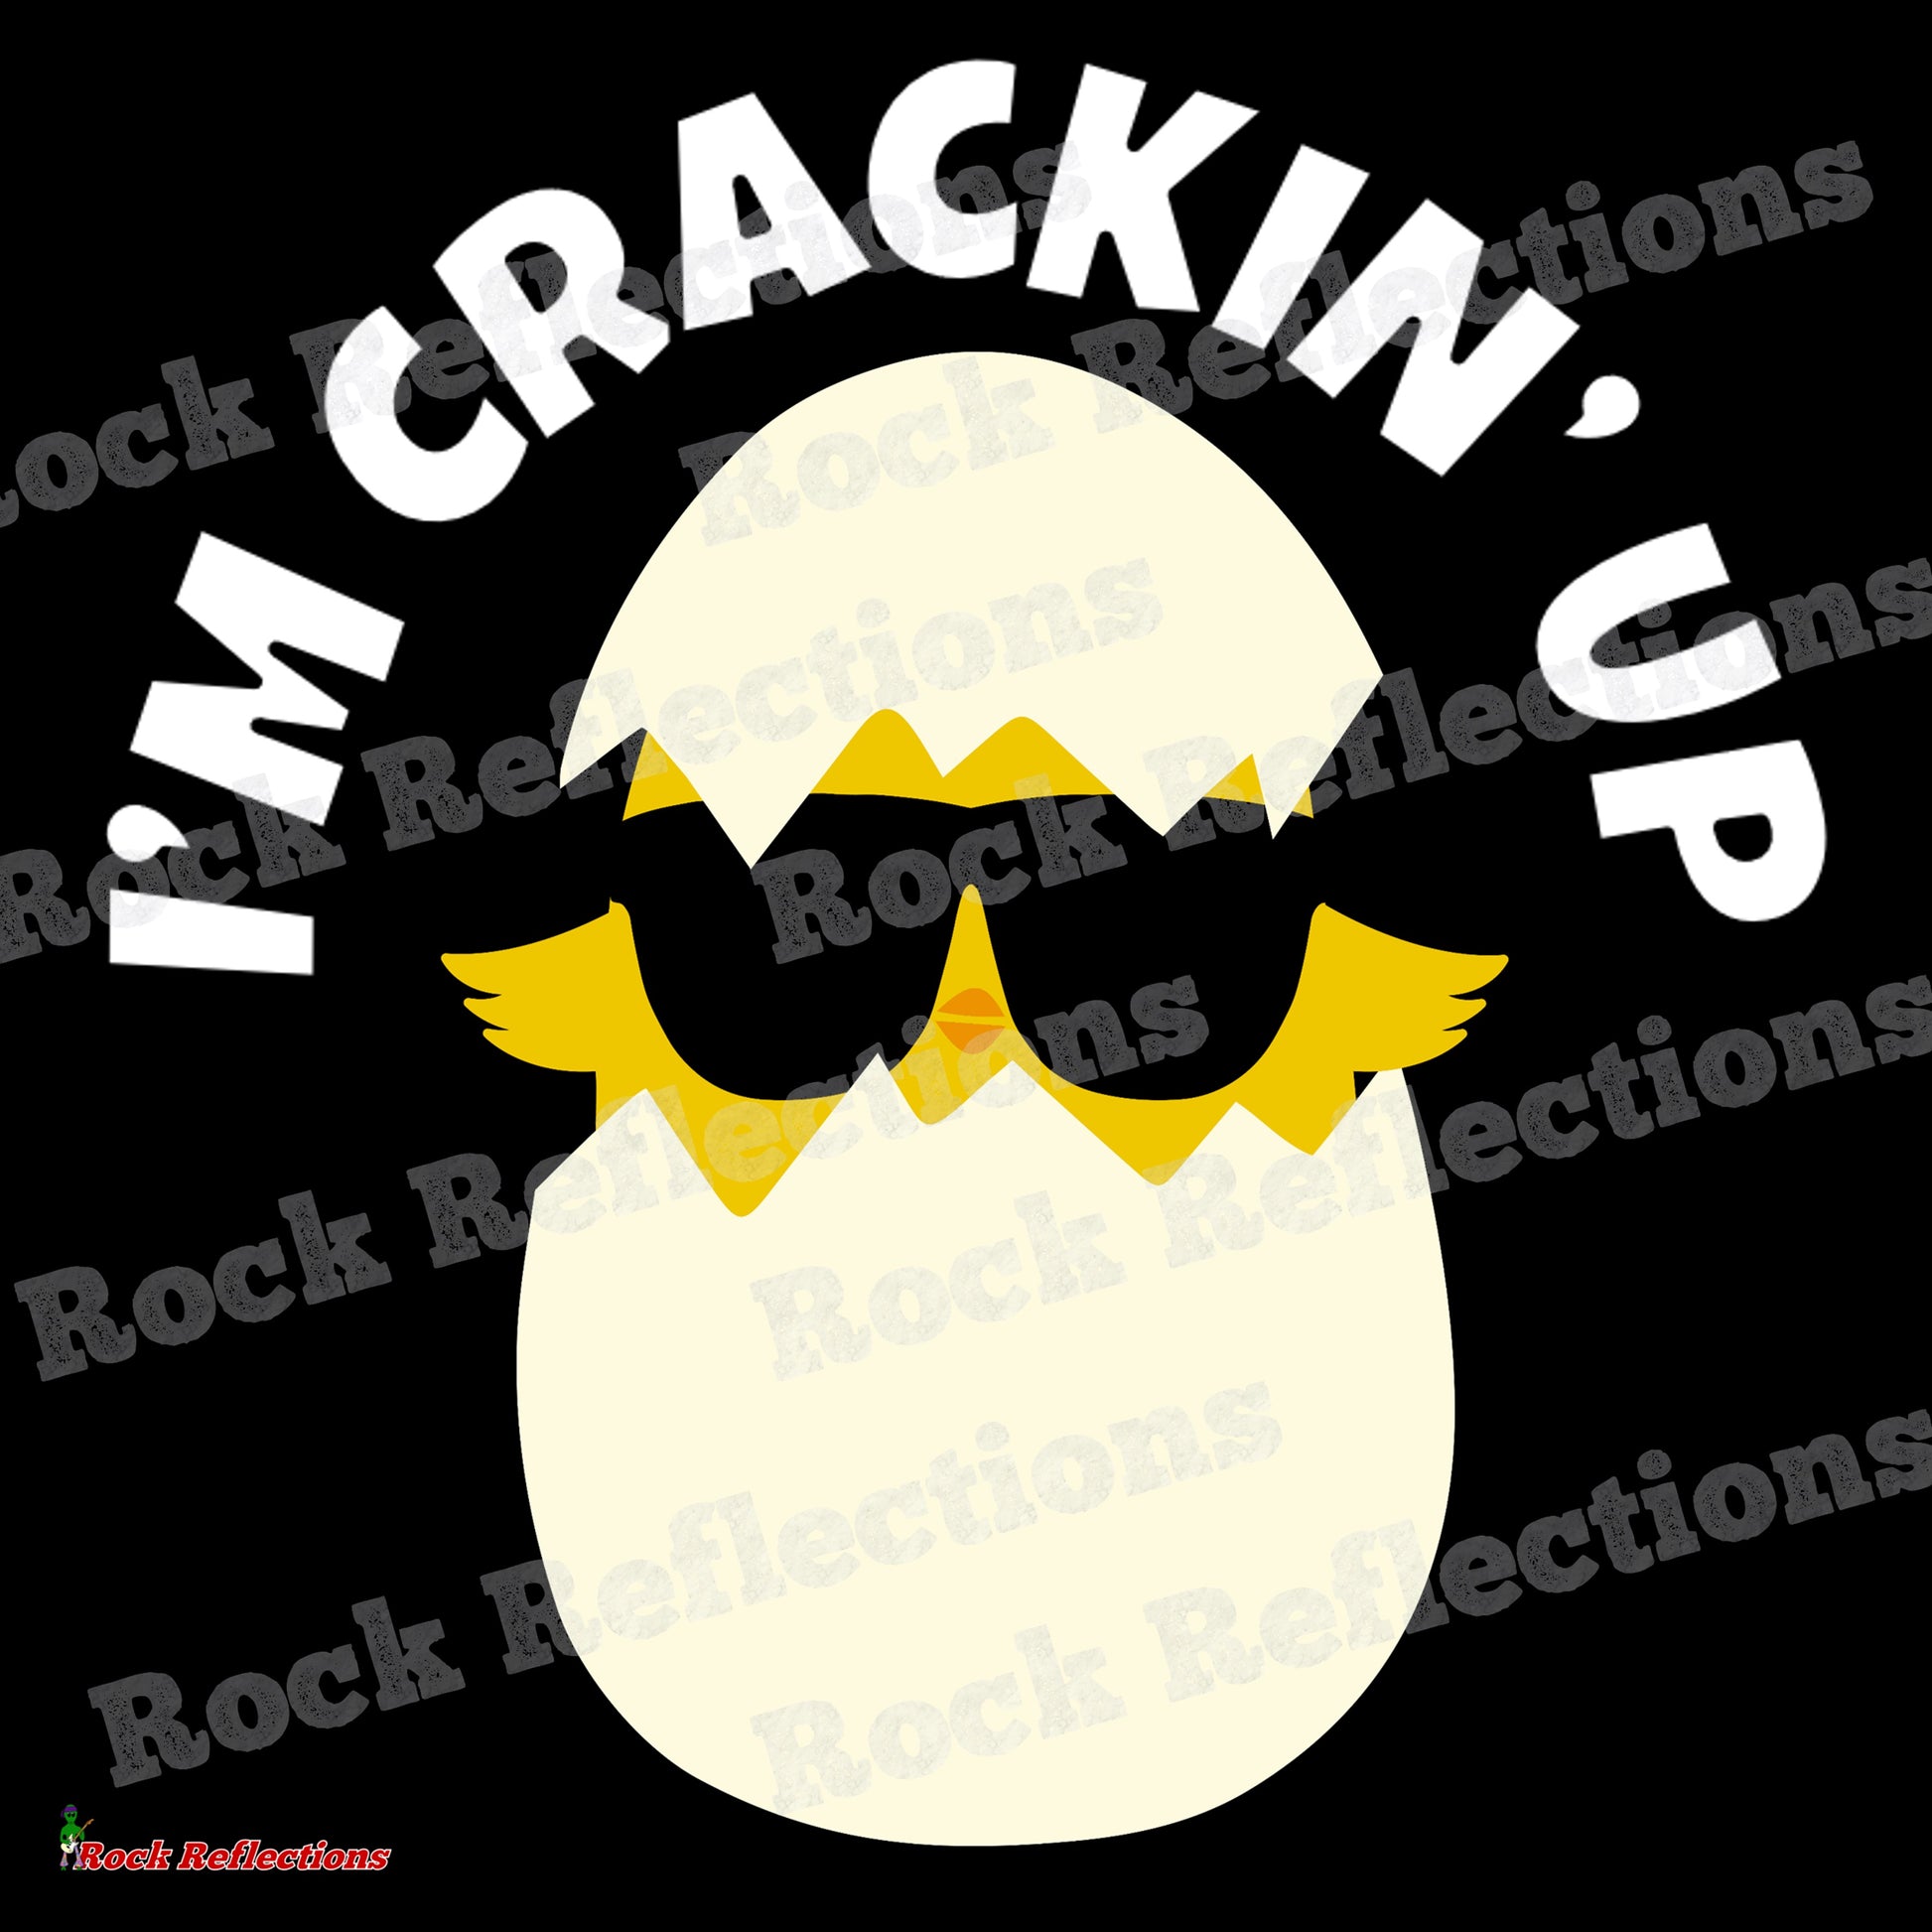 Crackin Up Egg Black Mug CustomCat